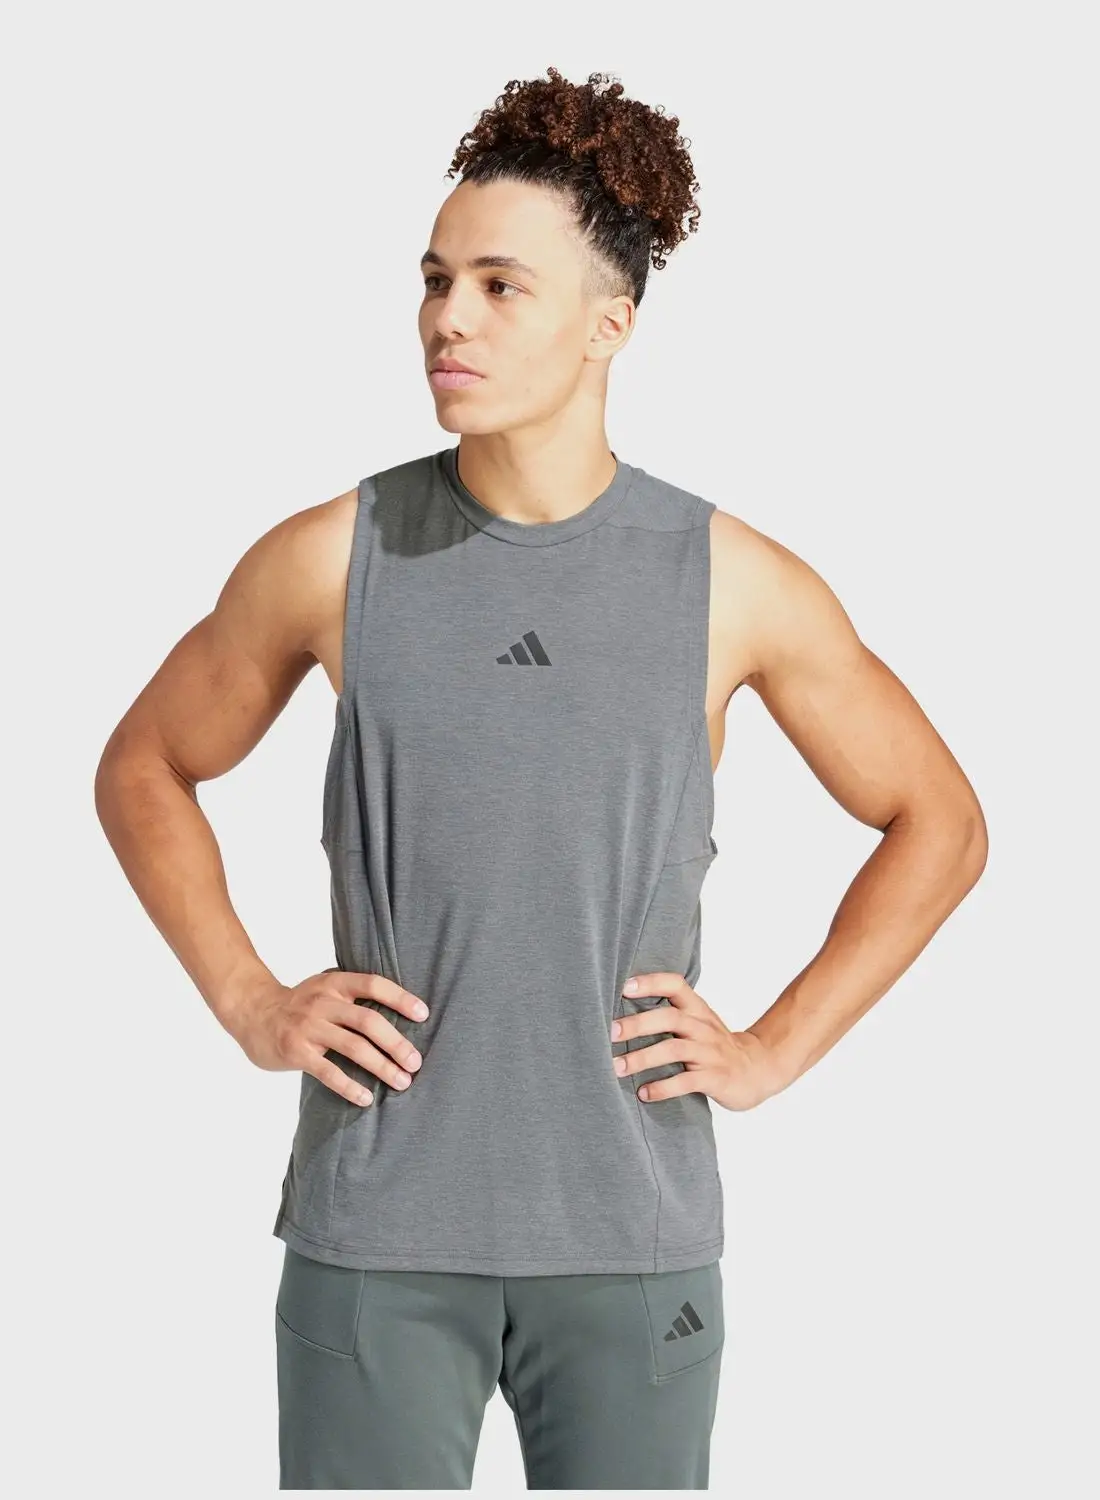 Adidas Designed For Training Vest